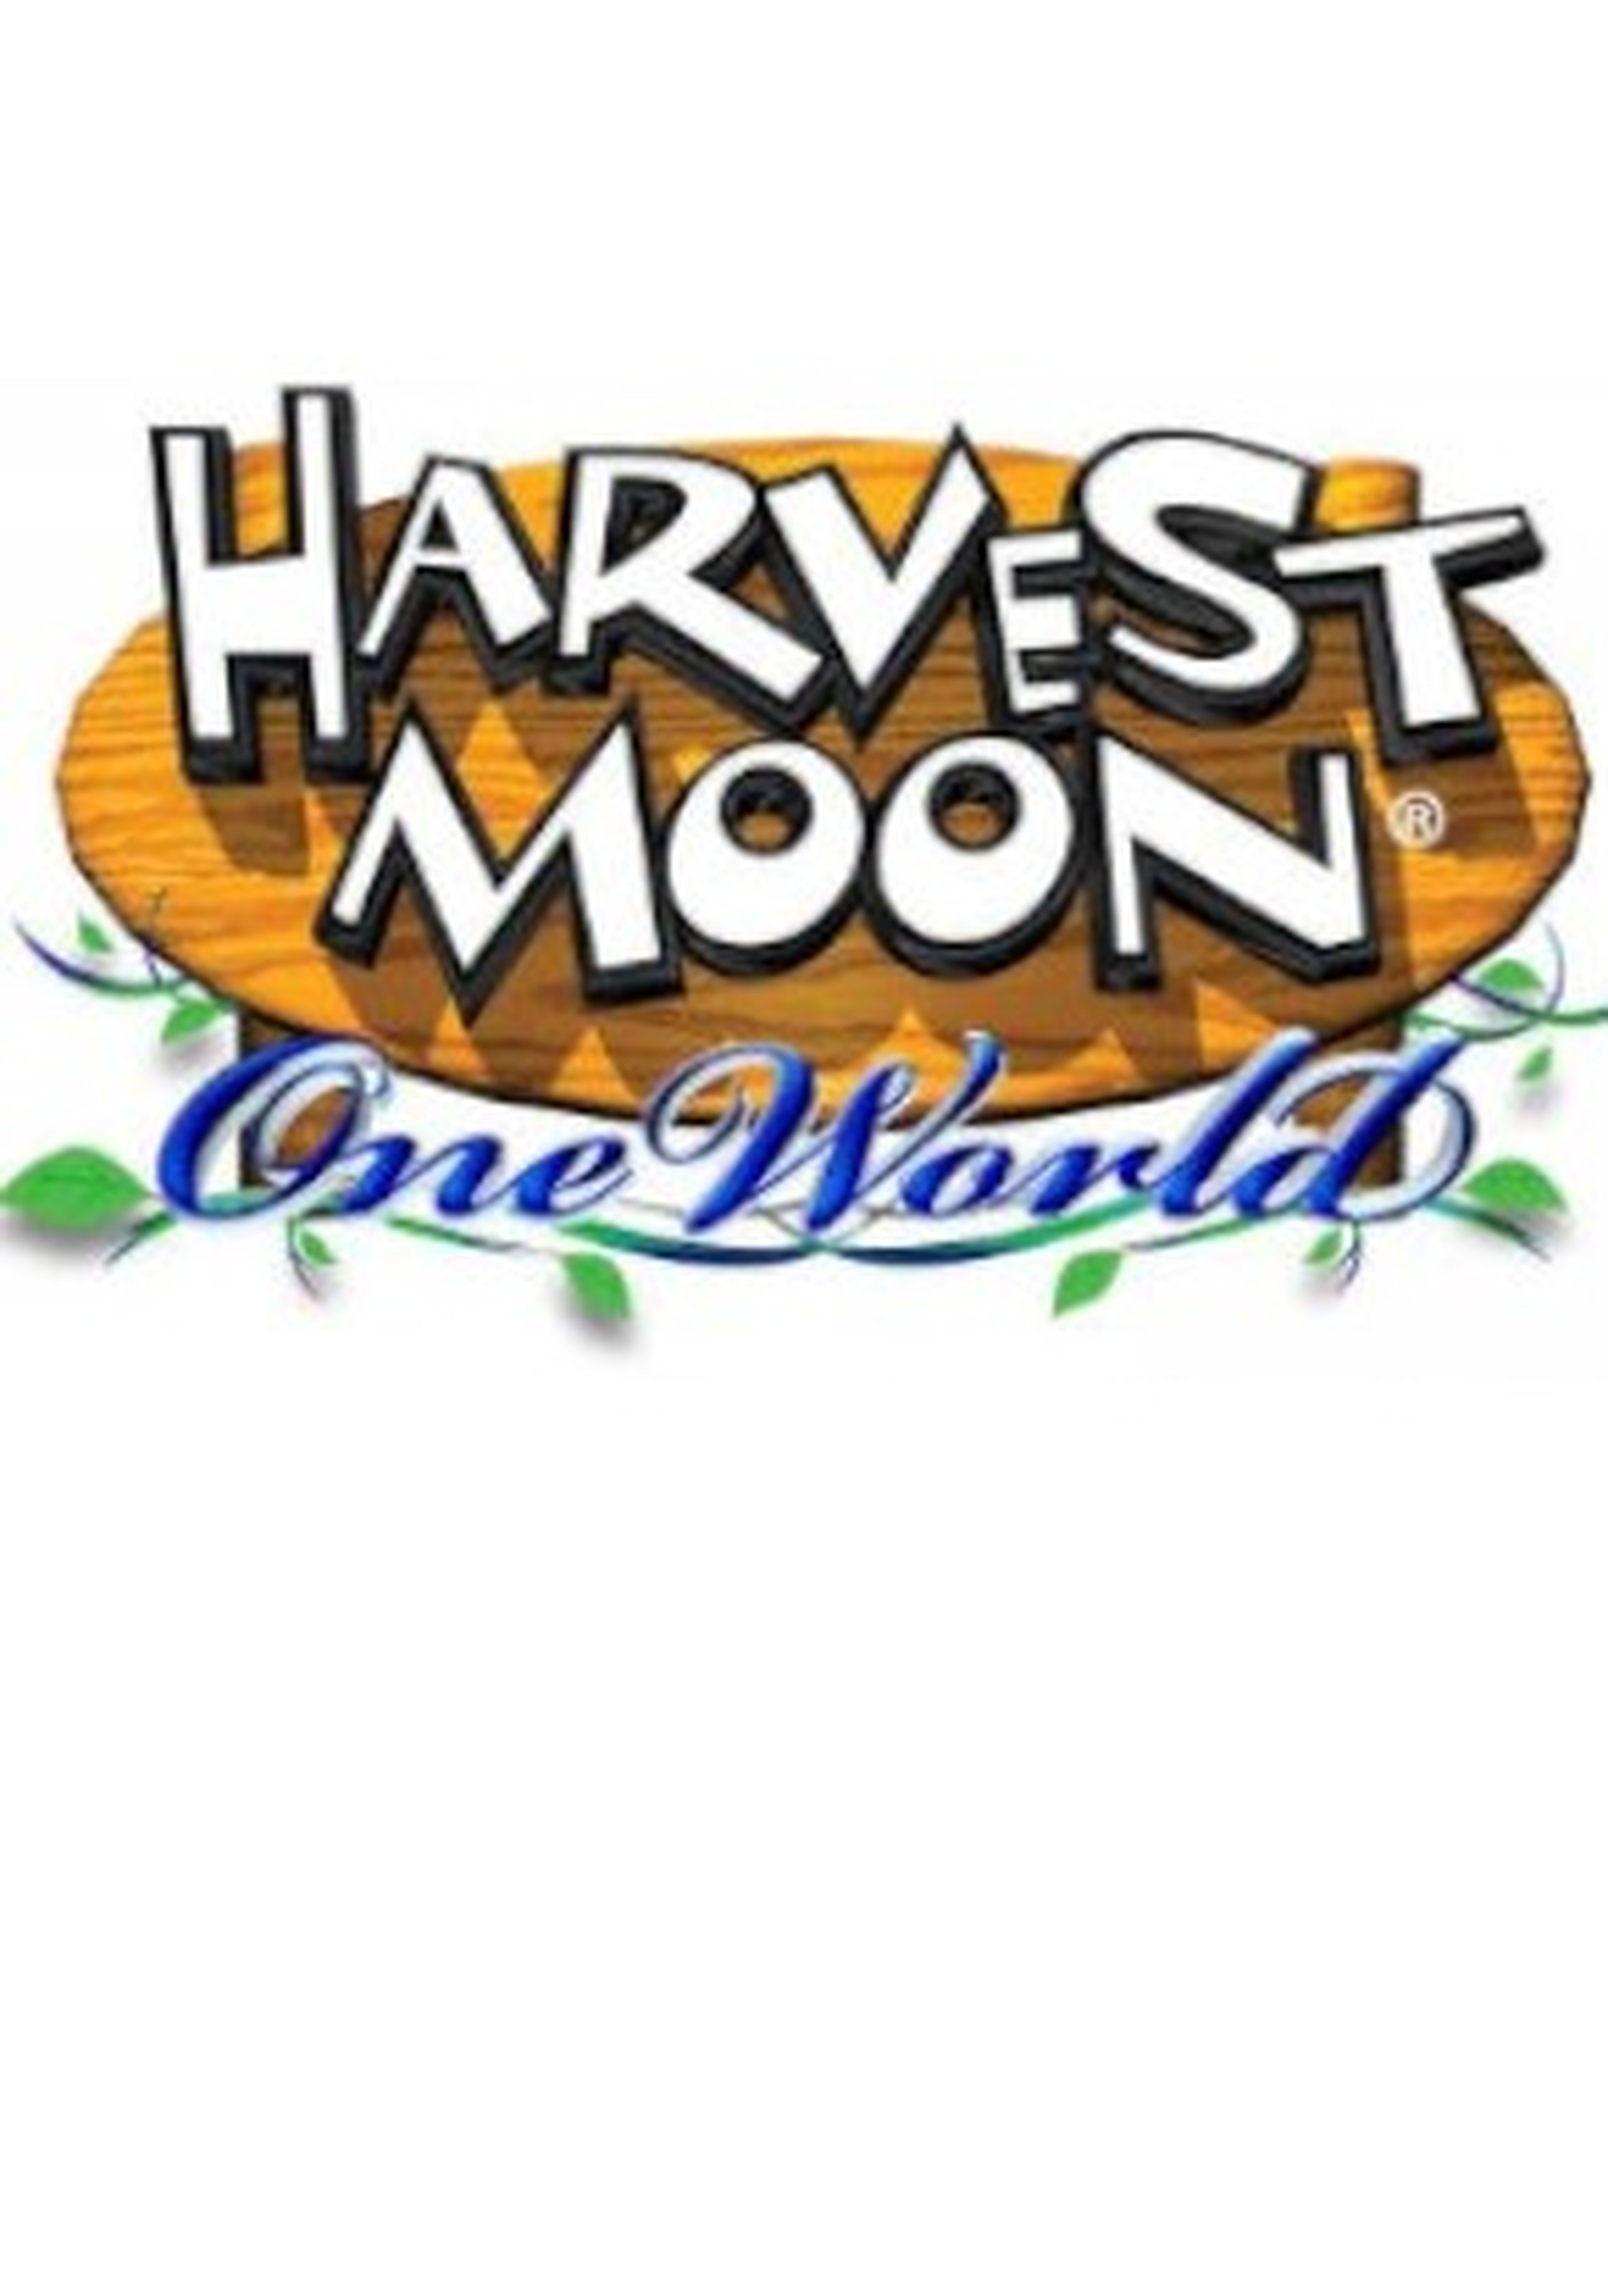 harvest moon one world ficha